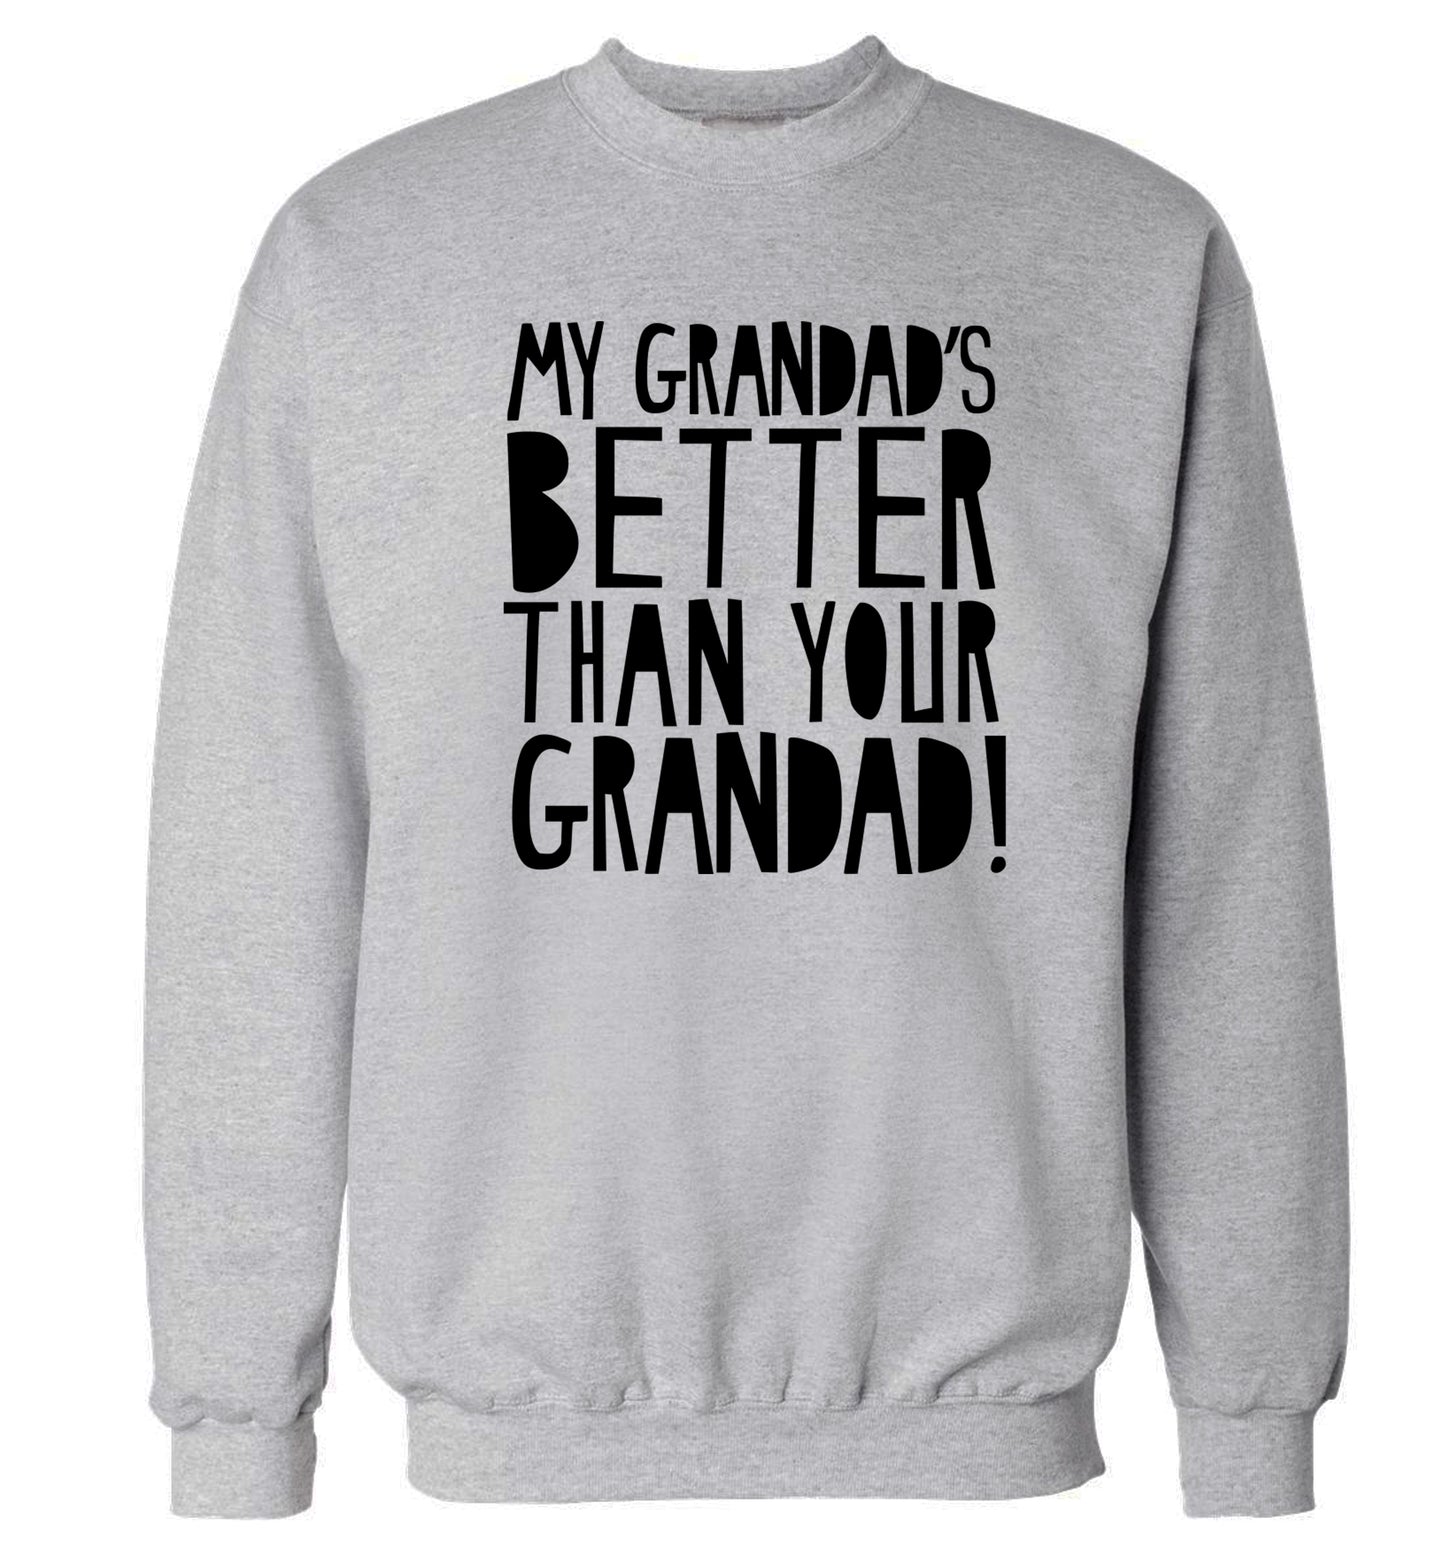 My Grandad's better than your grandad Adult's unisex grey Sweater 2XL